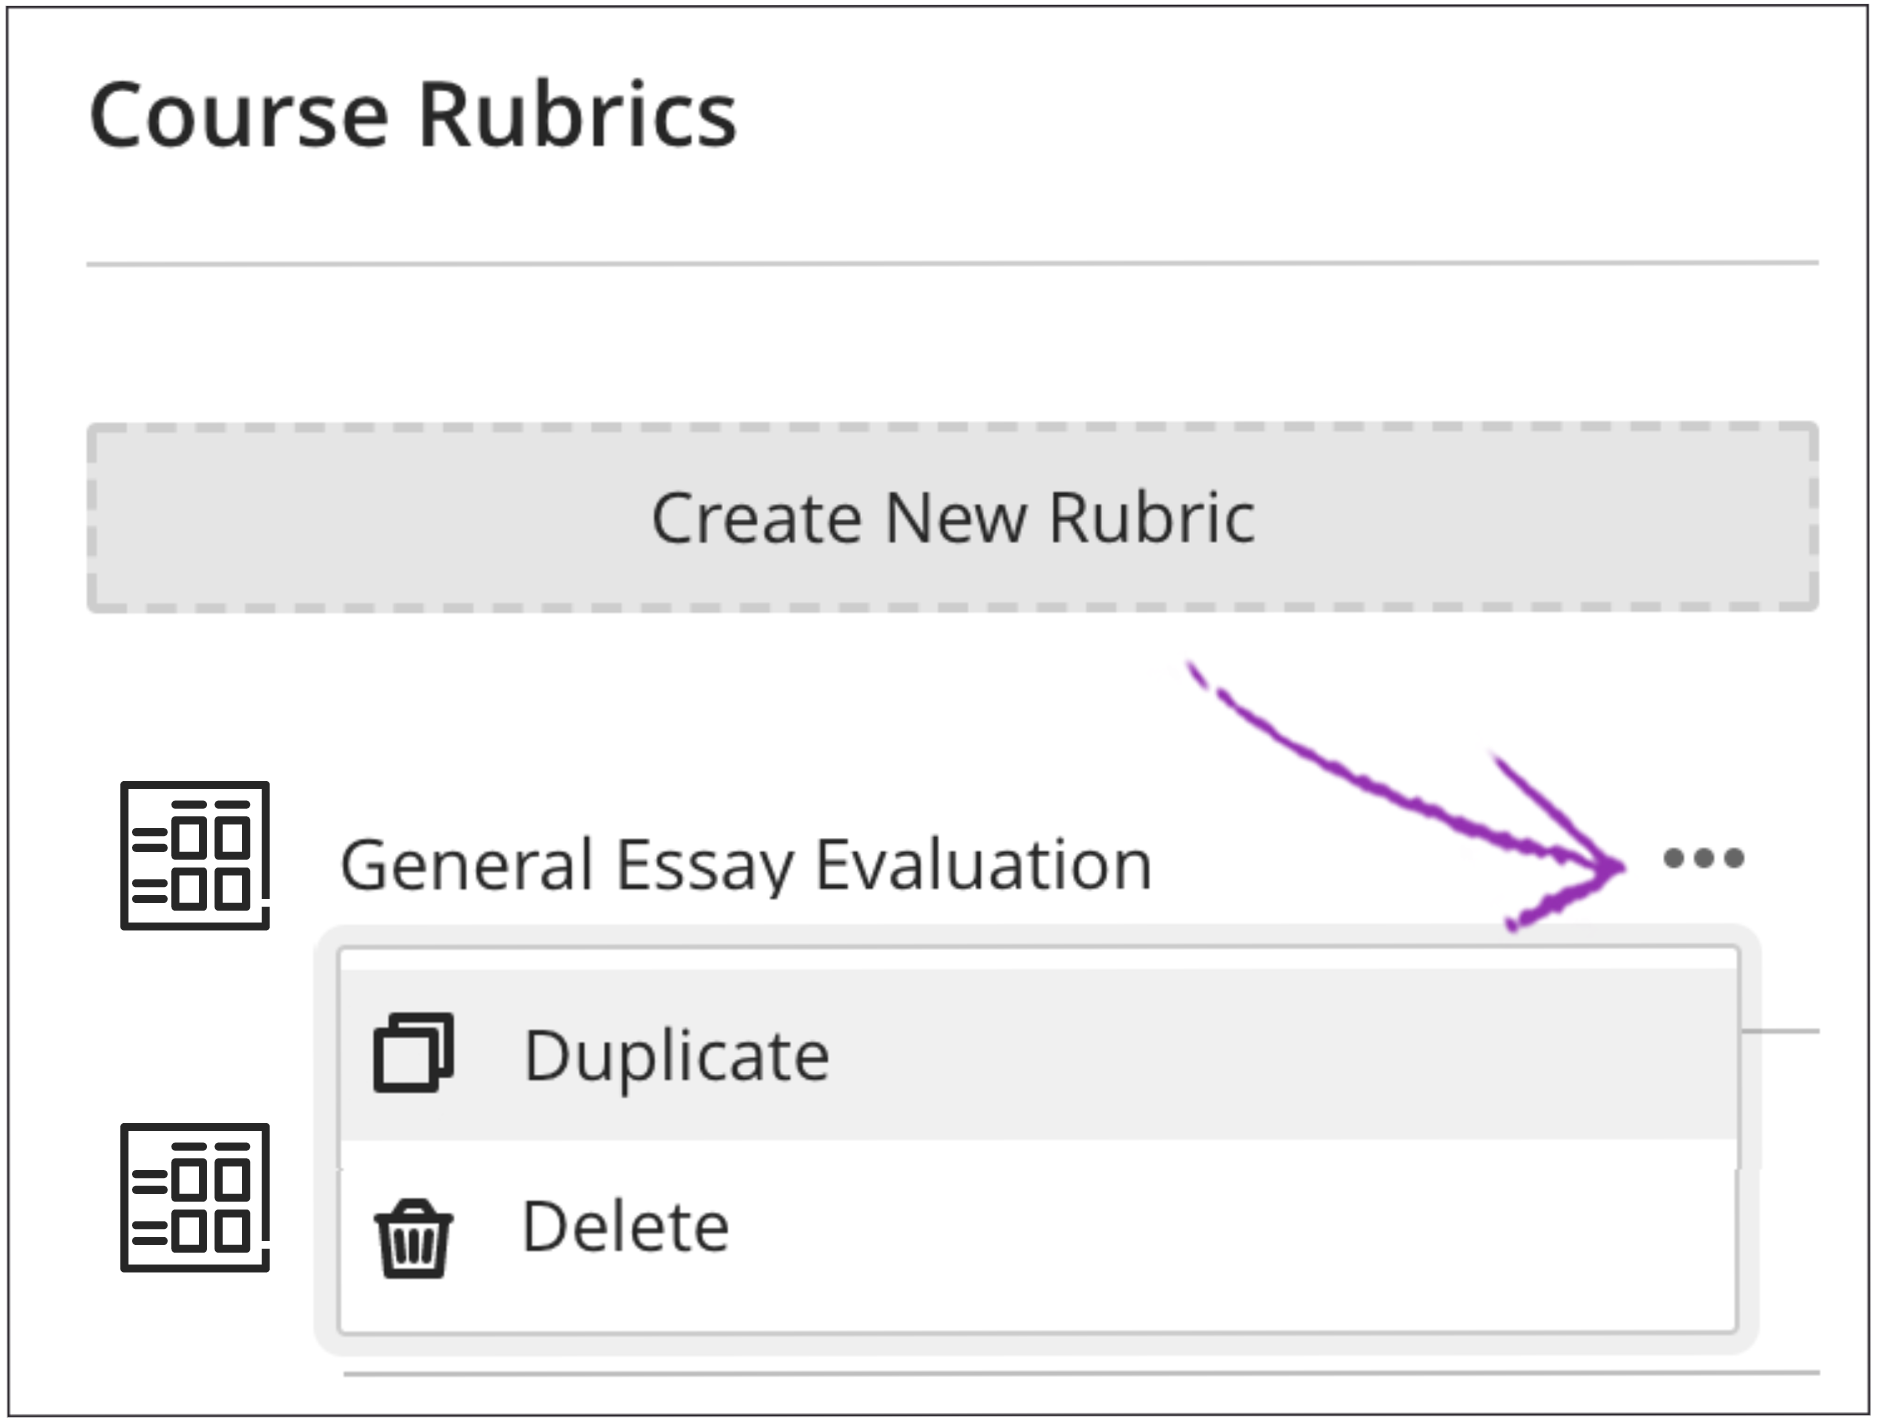 Rubric options menu open showing the duplicate option